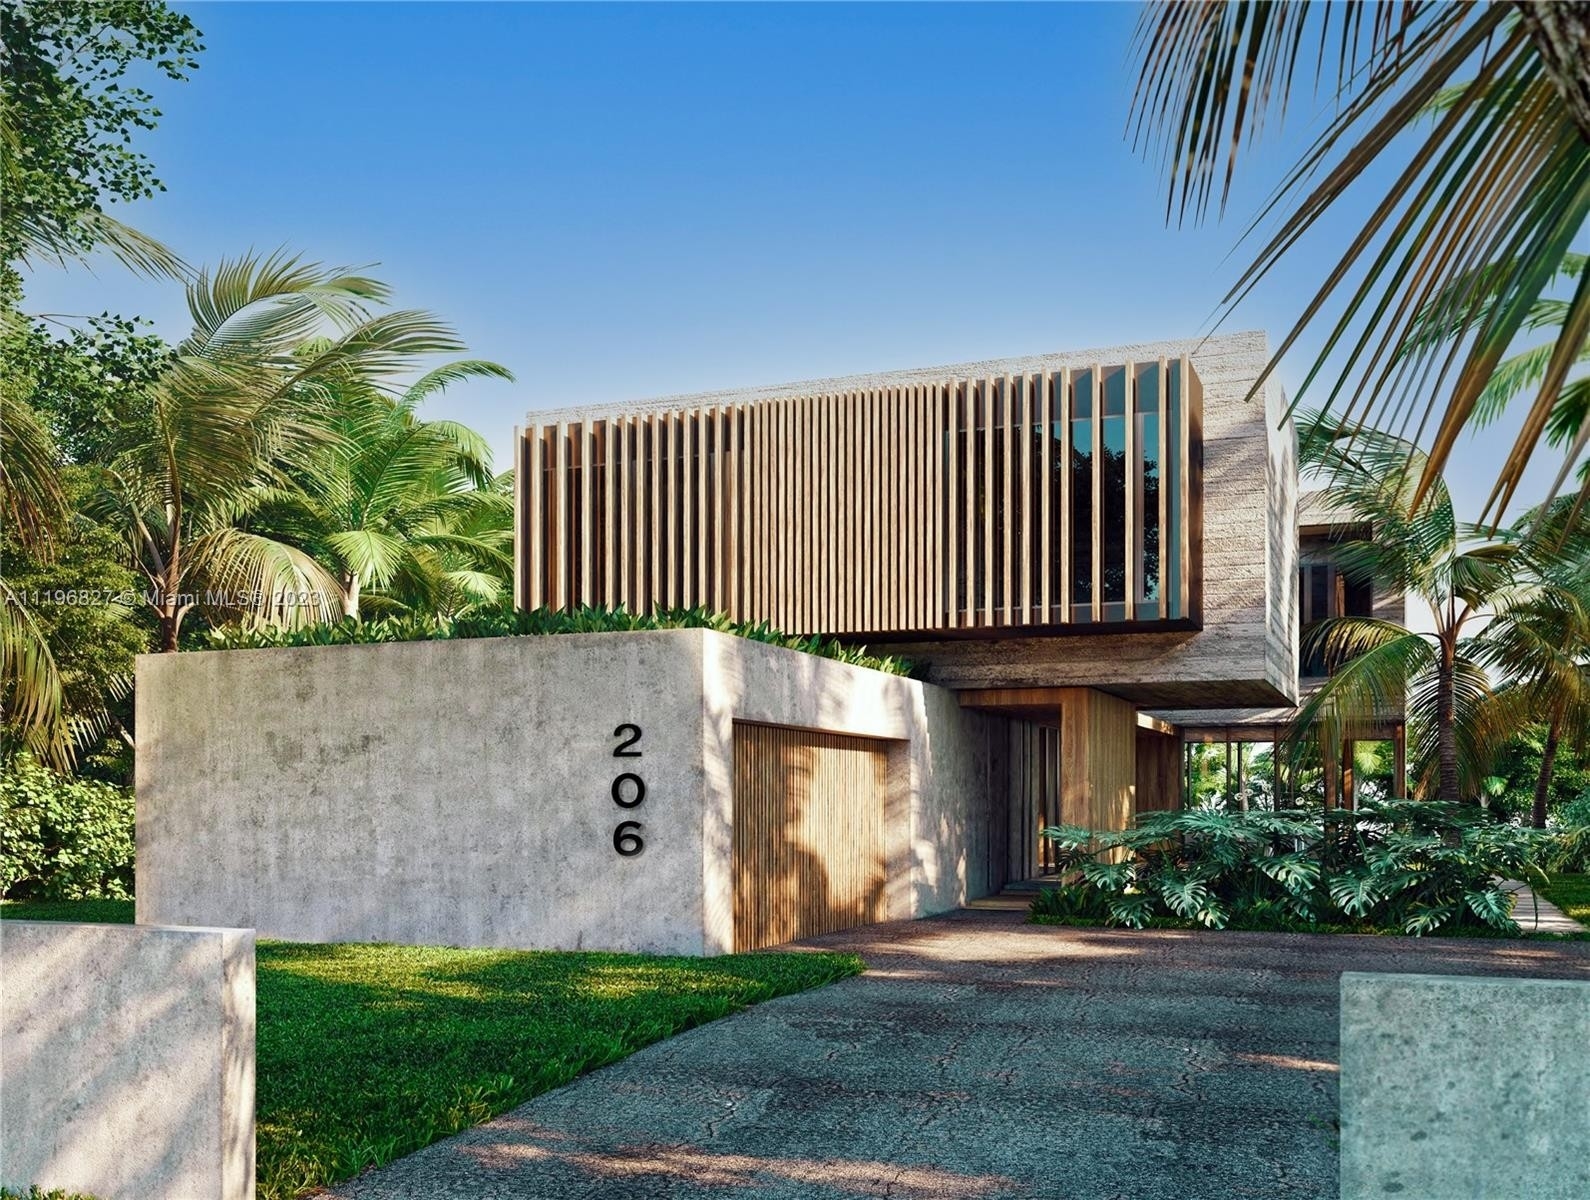 Property at South Beach, Miami Beach, Florida 33139